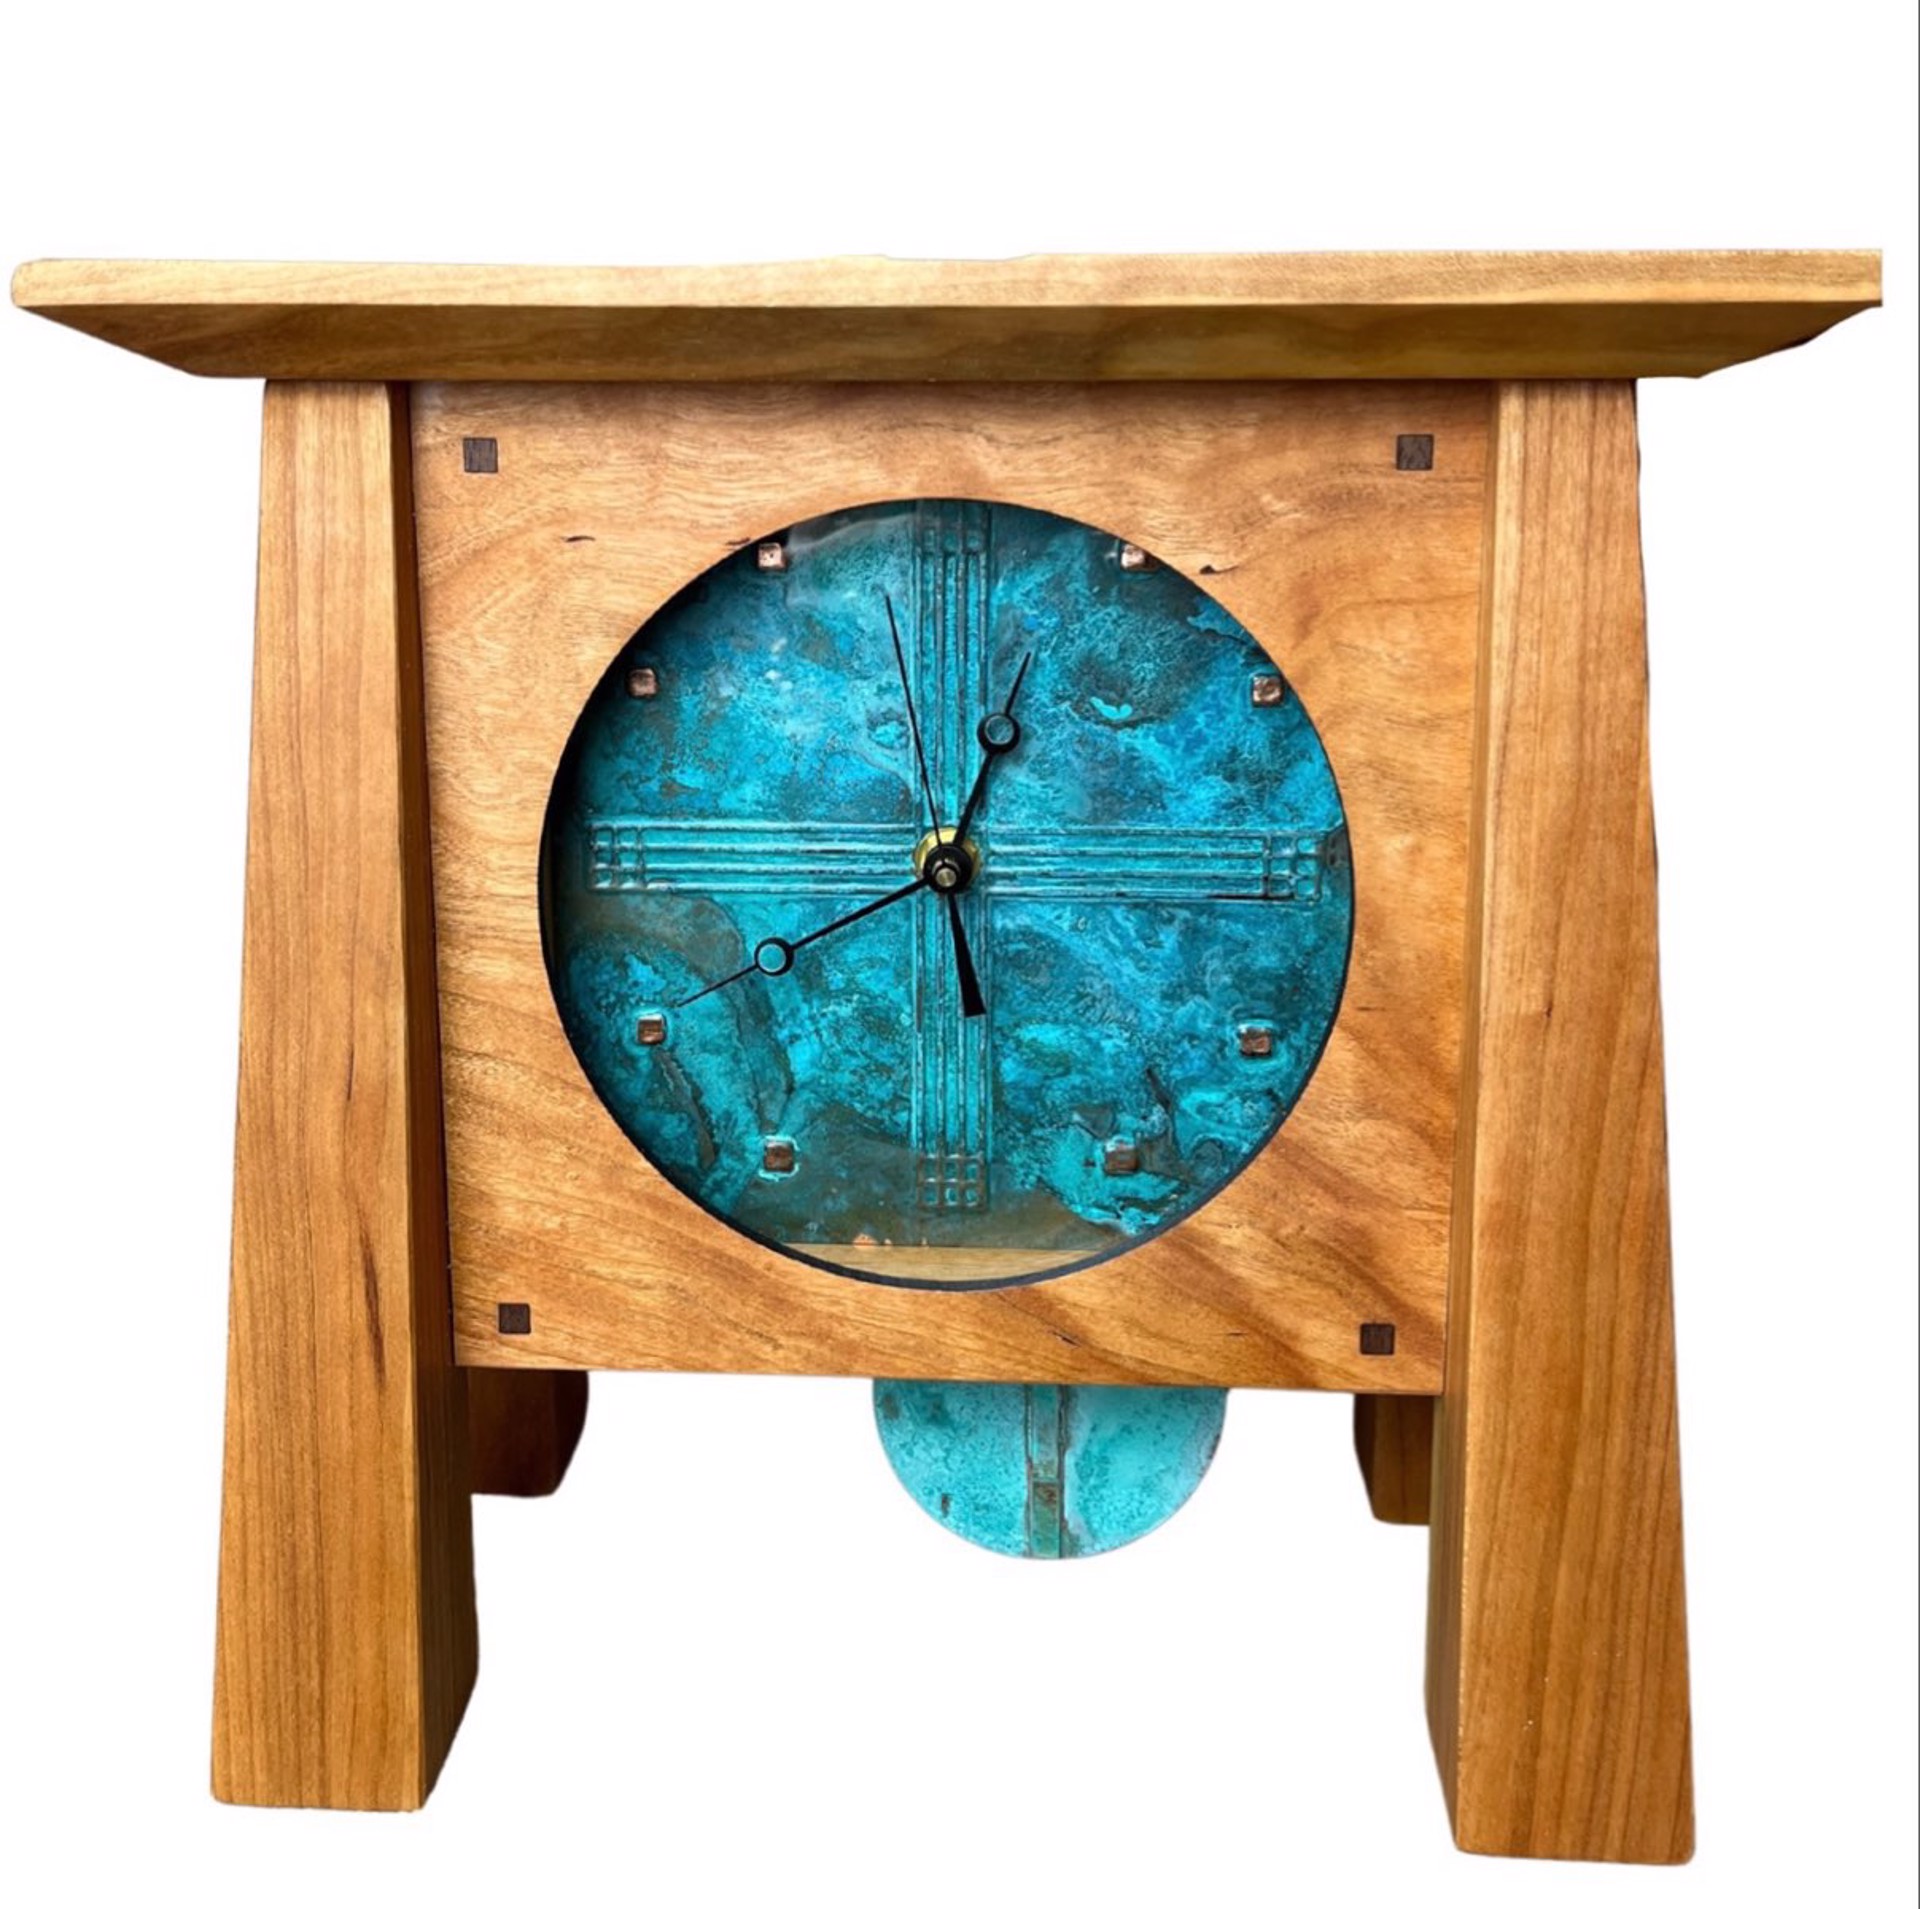 Prairie Deluxe Mantel Clock by Sabbath Day Woods